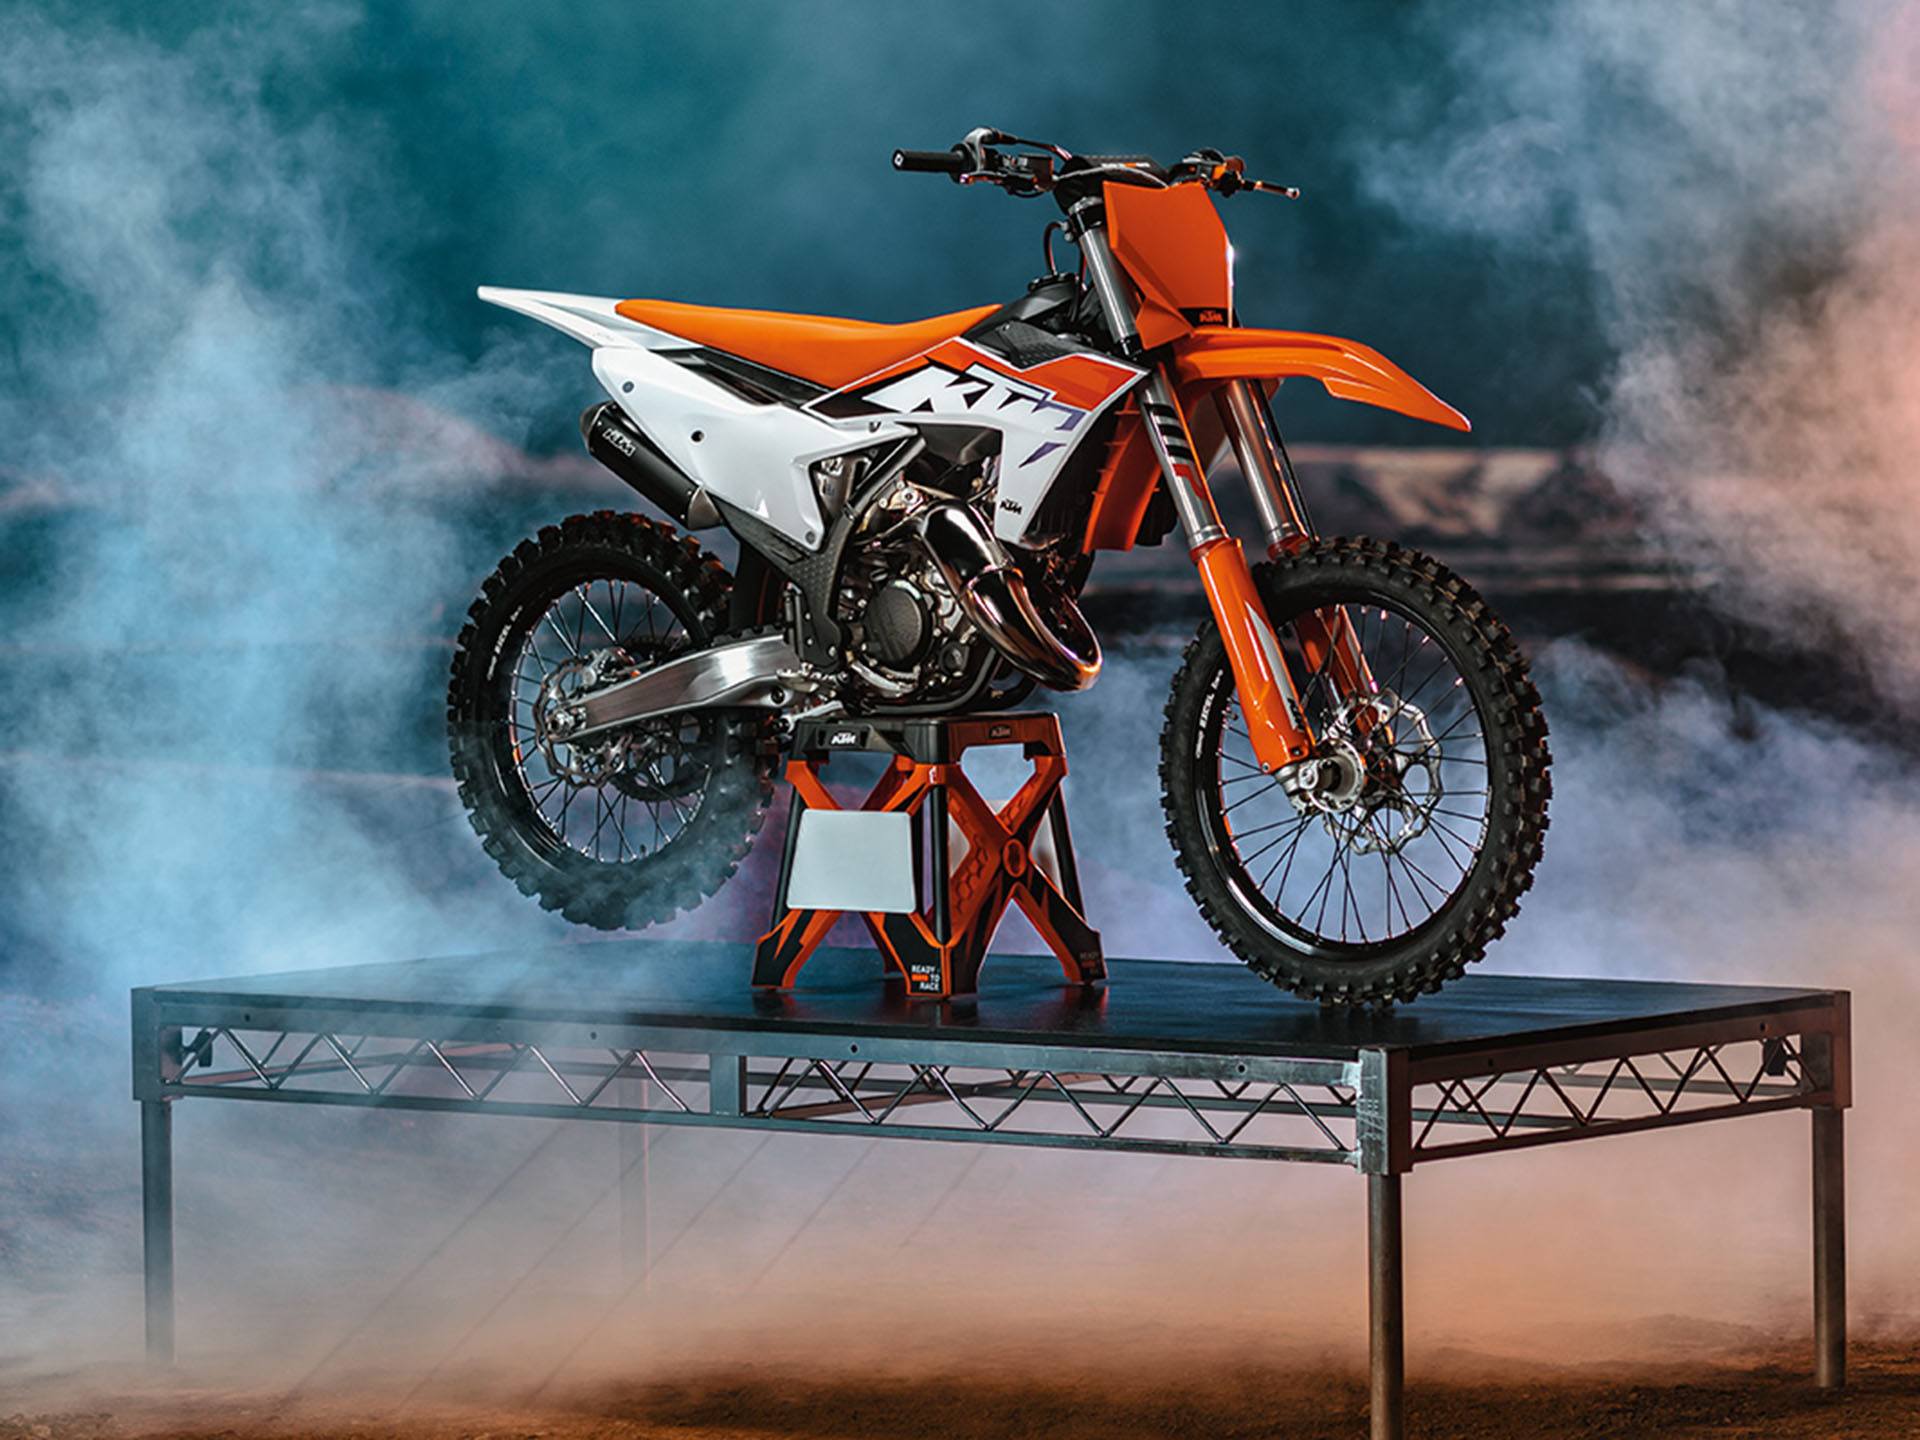 New 2023 Ktm 125 Sx Orange | Motorcycles In Issaquah Wa |